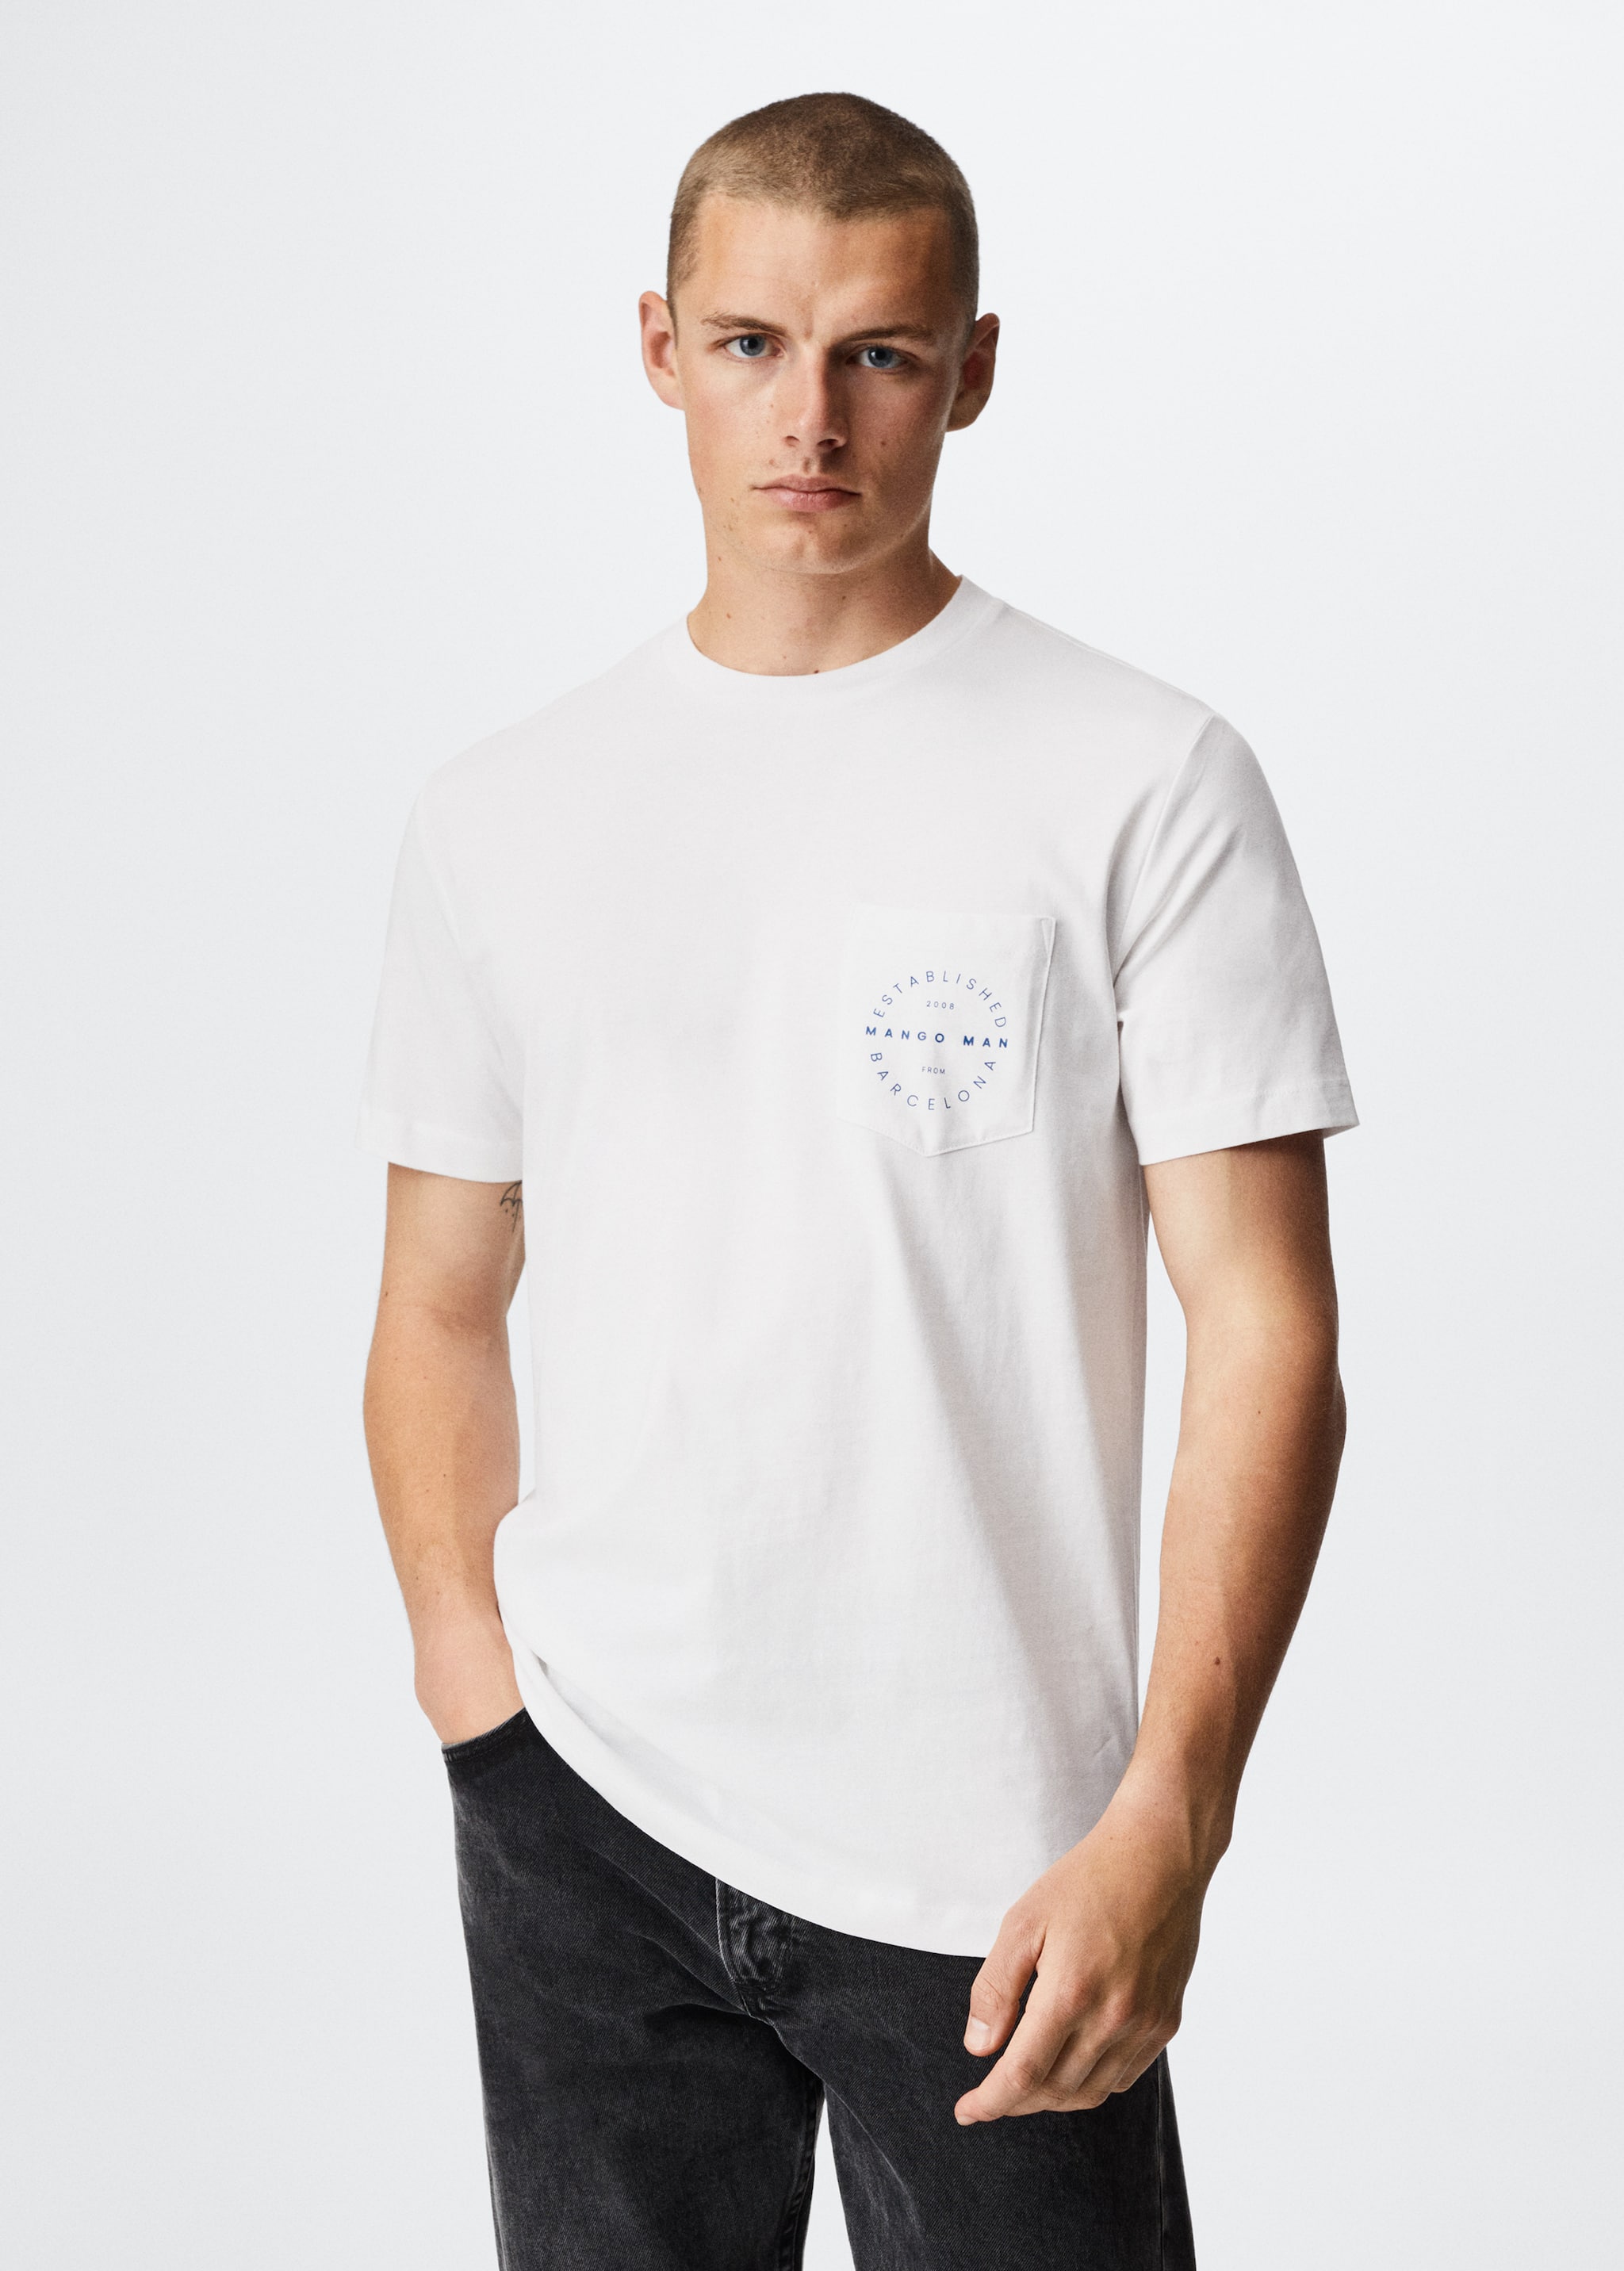 Logo pocket t-shirt - Medium plane